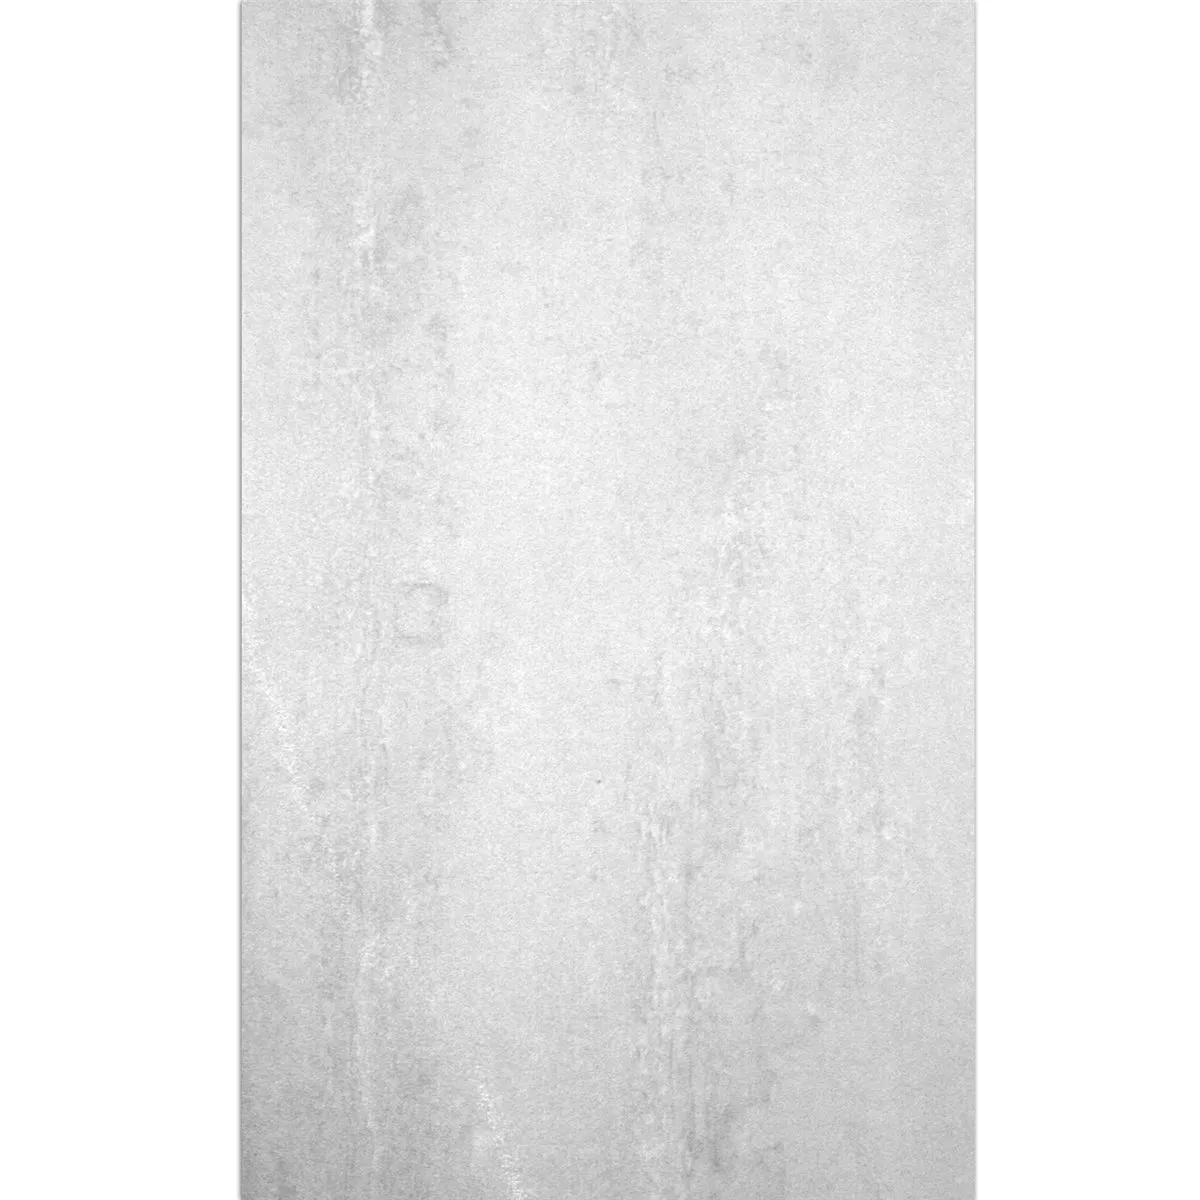 Vzorek Podlahové Dlaždice Madeira Bílá Naleštěná 60x120cm